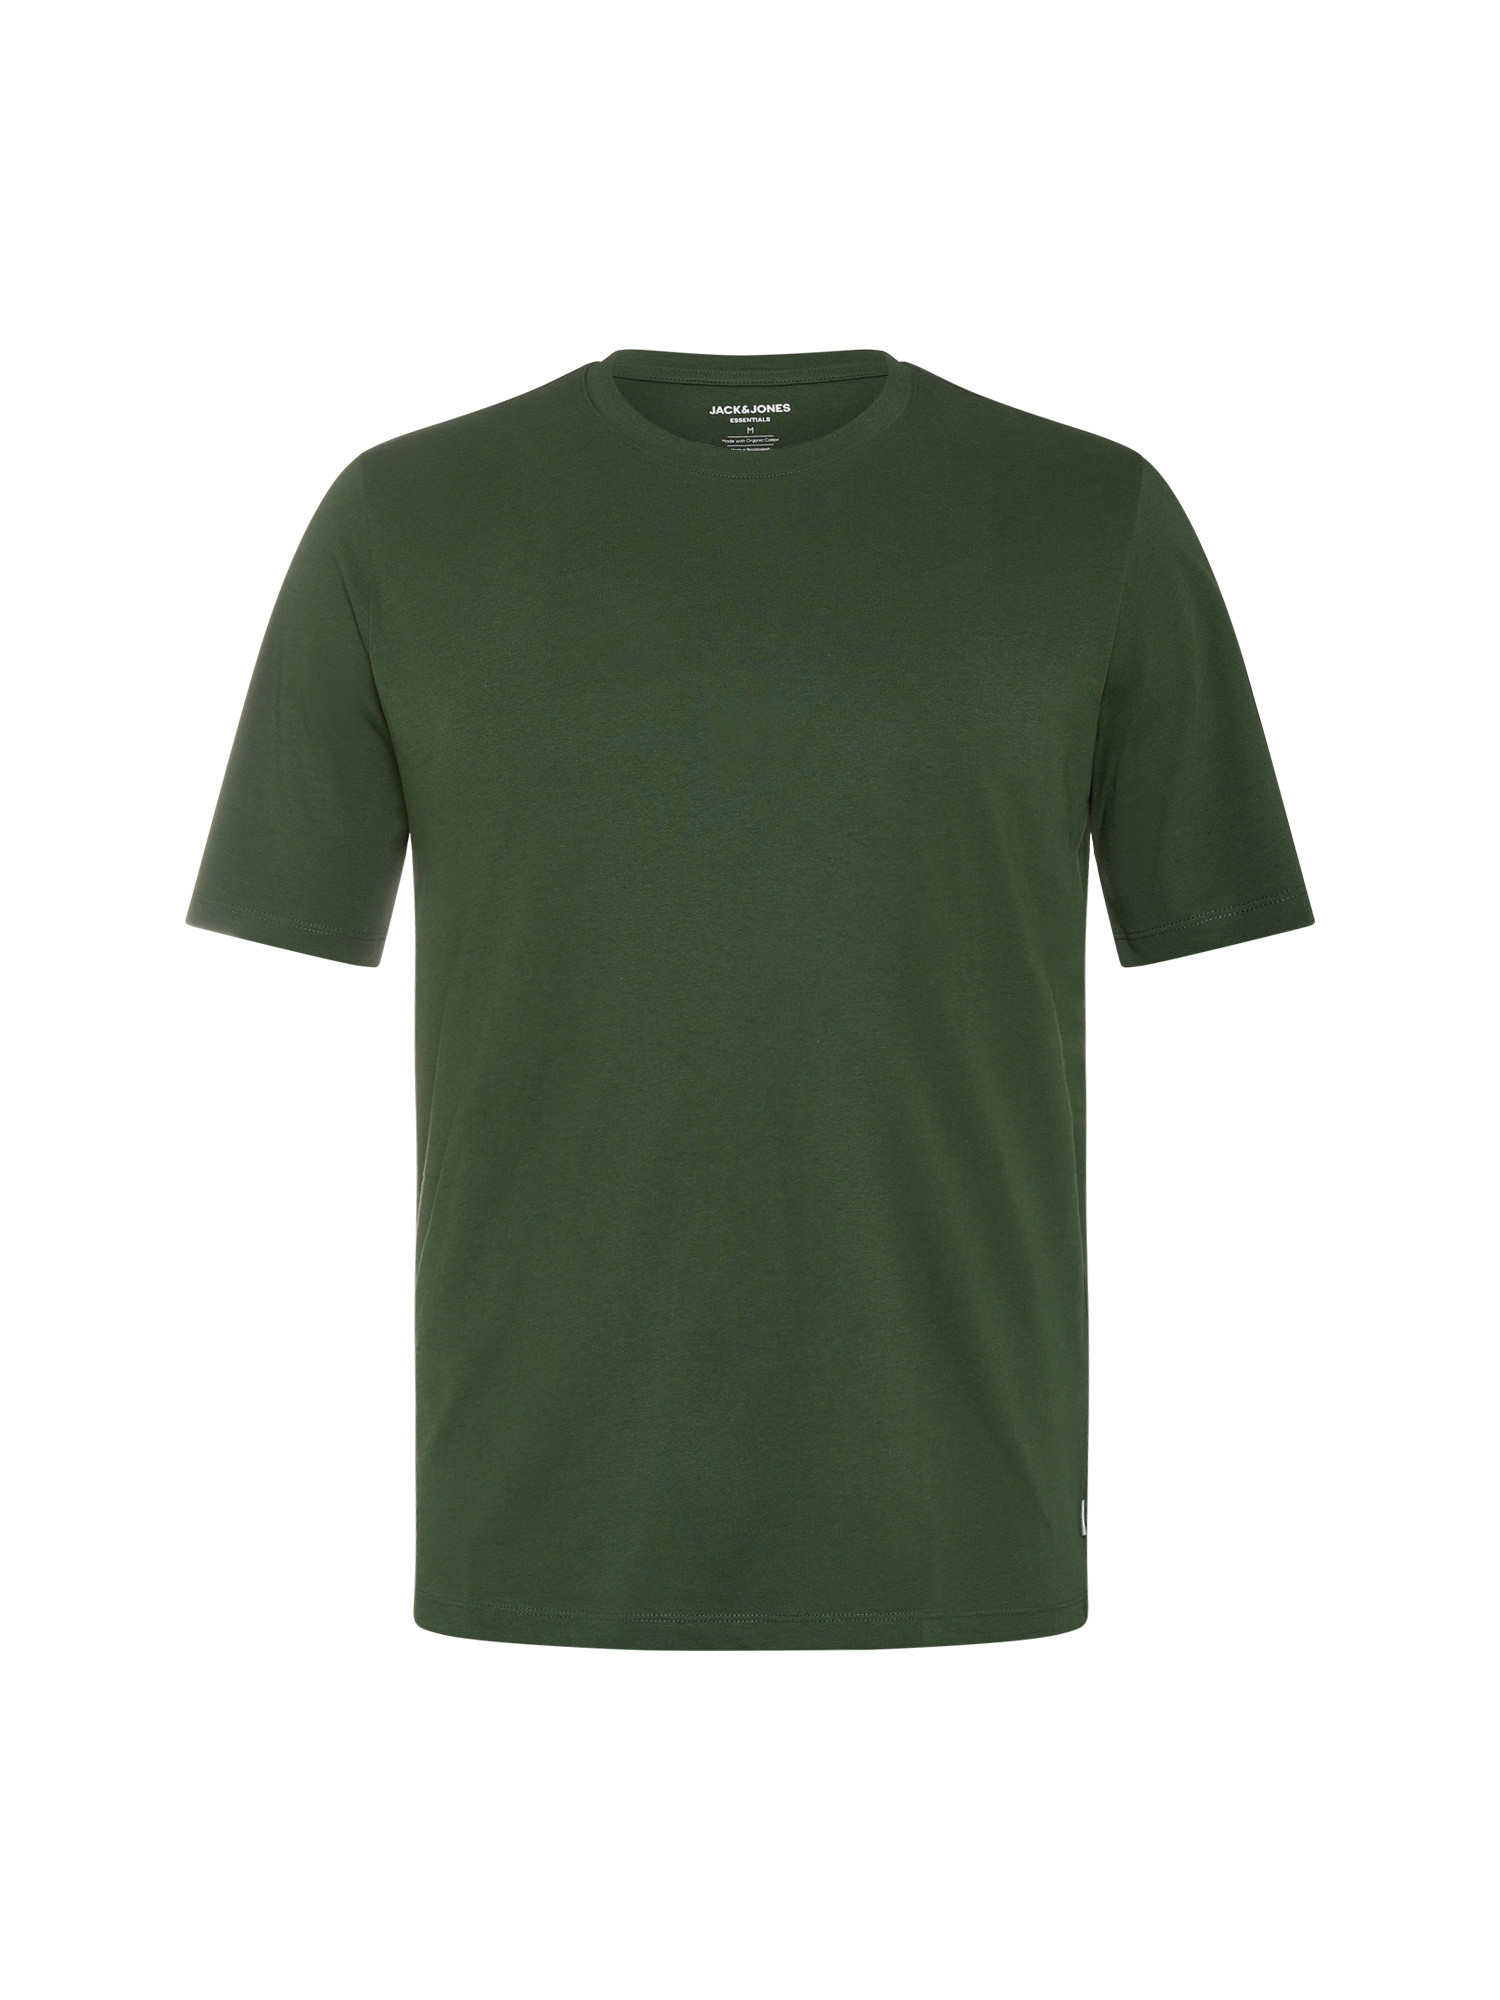 Jack & Jones - Cotton T-shirt, Dark Green, large image number 0